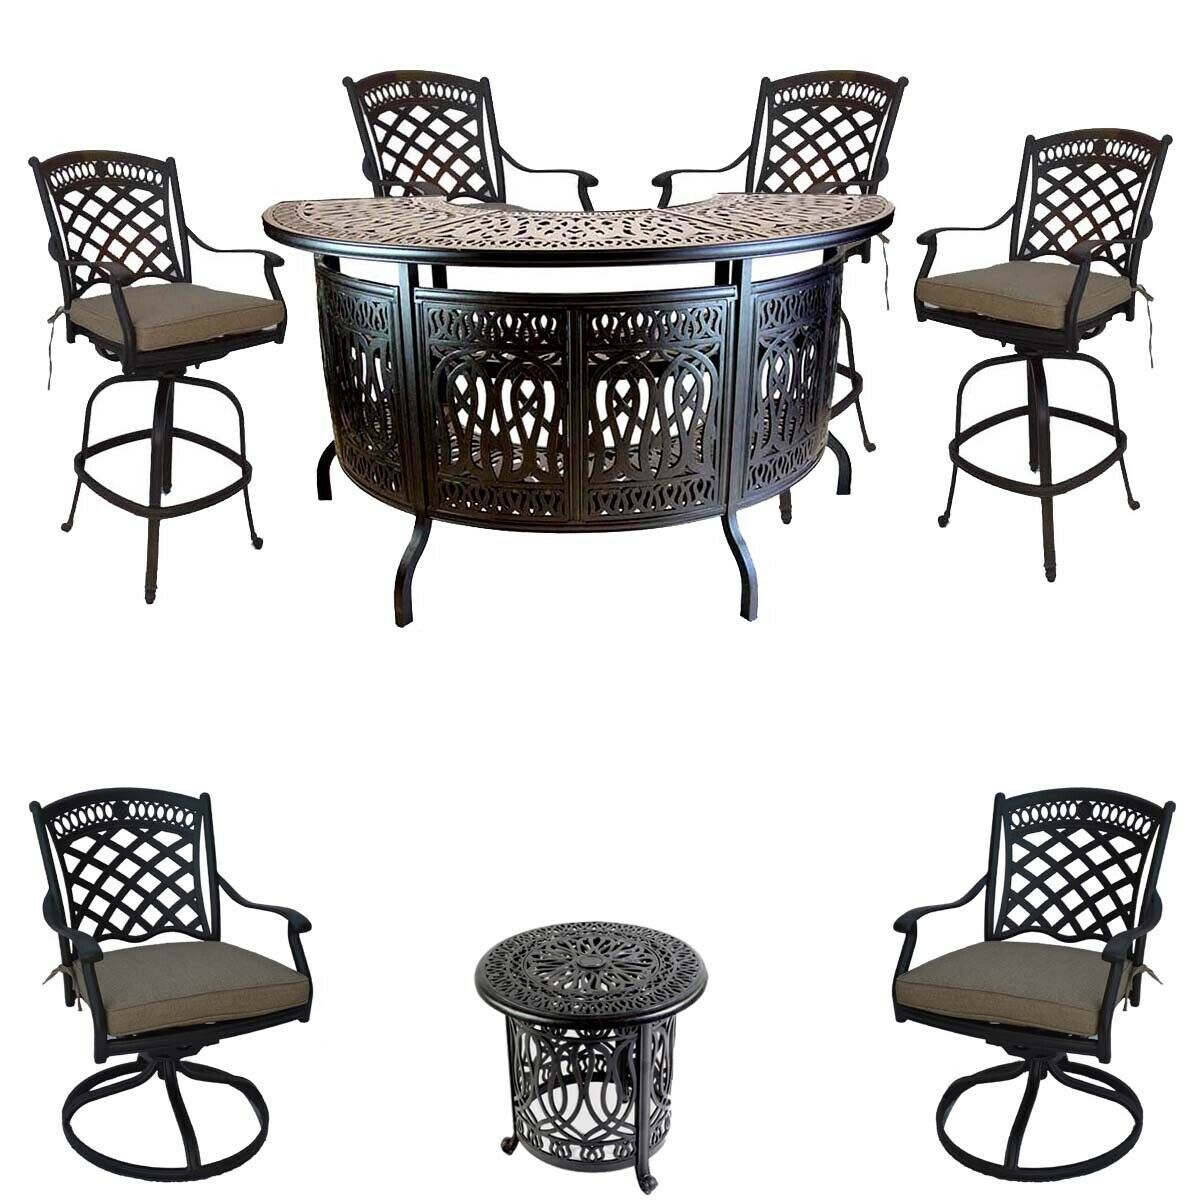 8 piece patio cast aluminum party bar and swivel bistro set with Sunbrella seats - $3,795.00